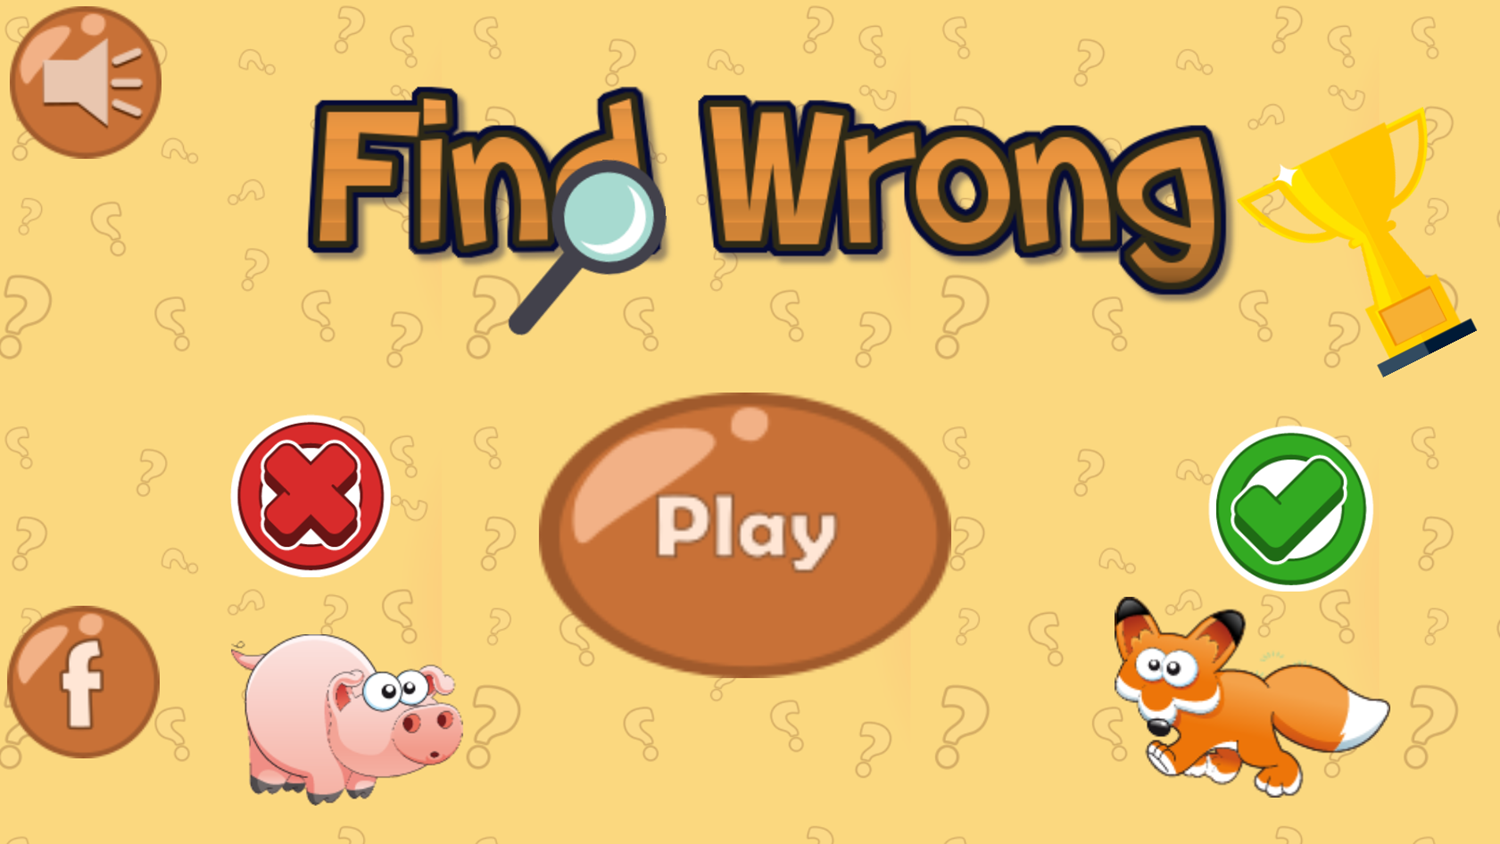 Find Wrong Game Welcome Screen Screenshot.